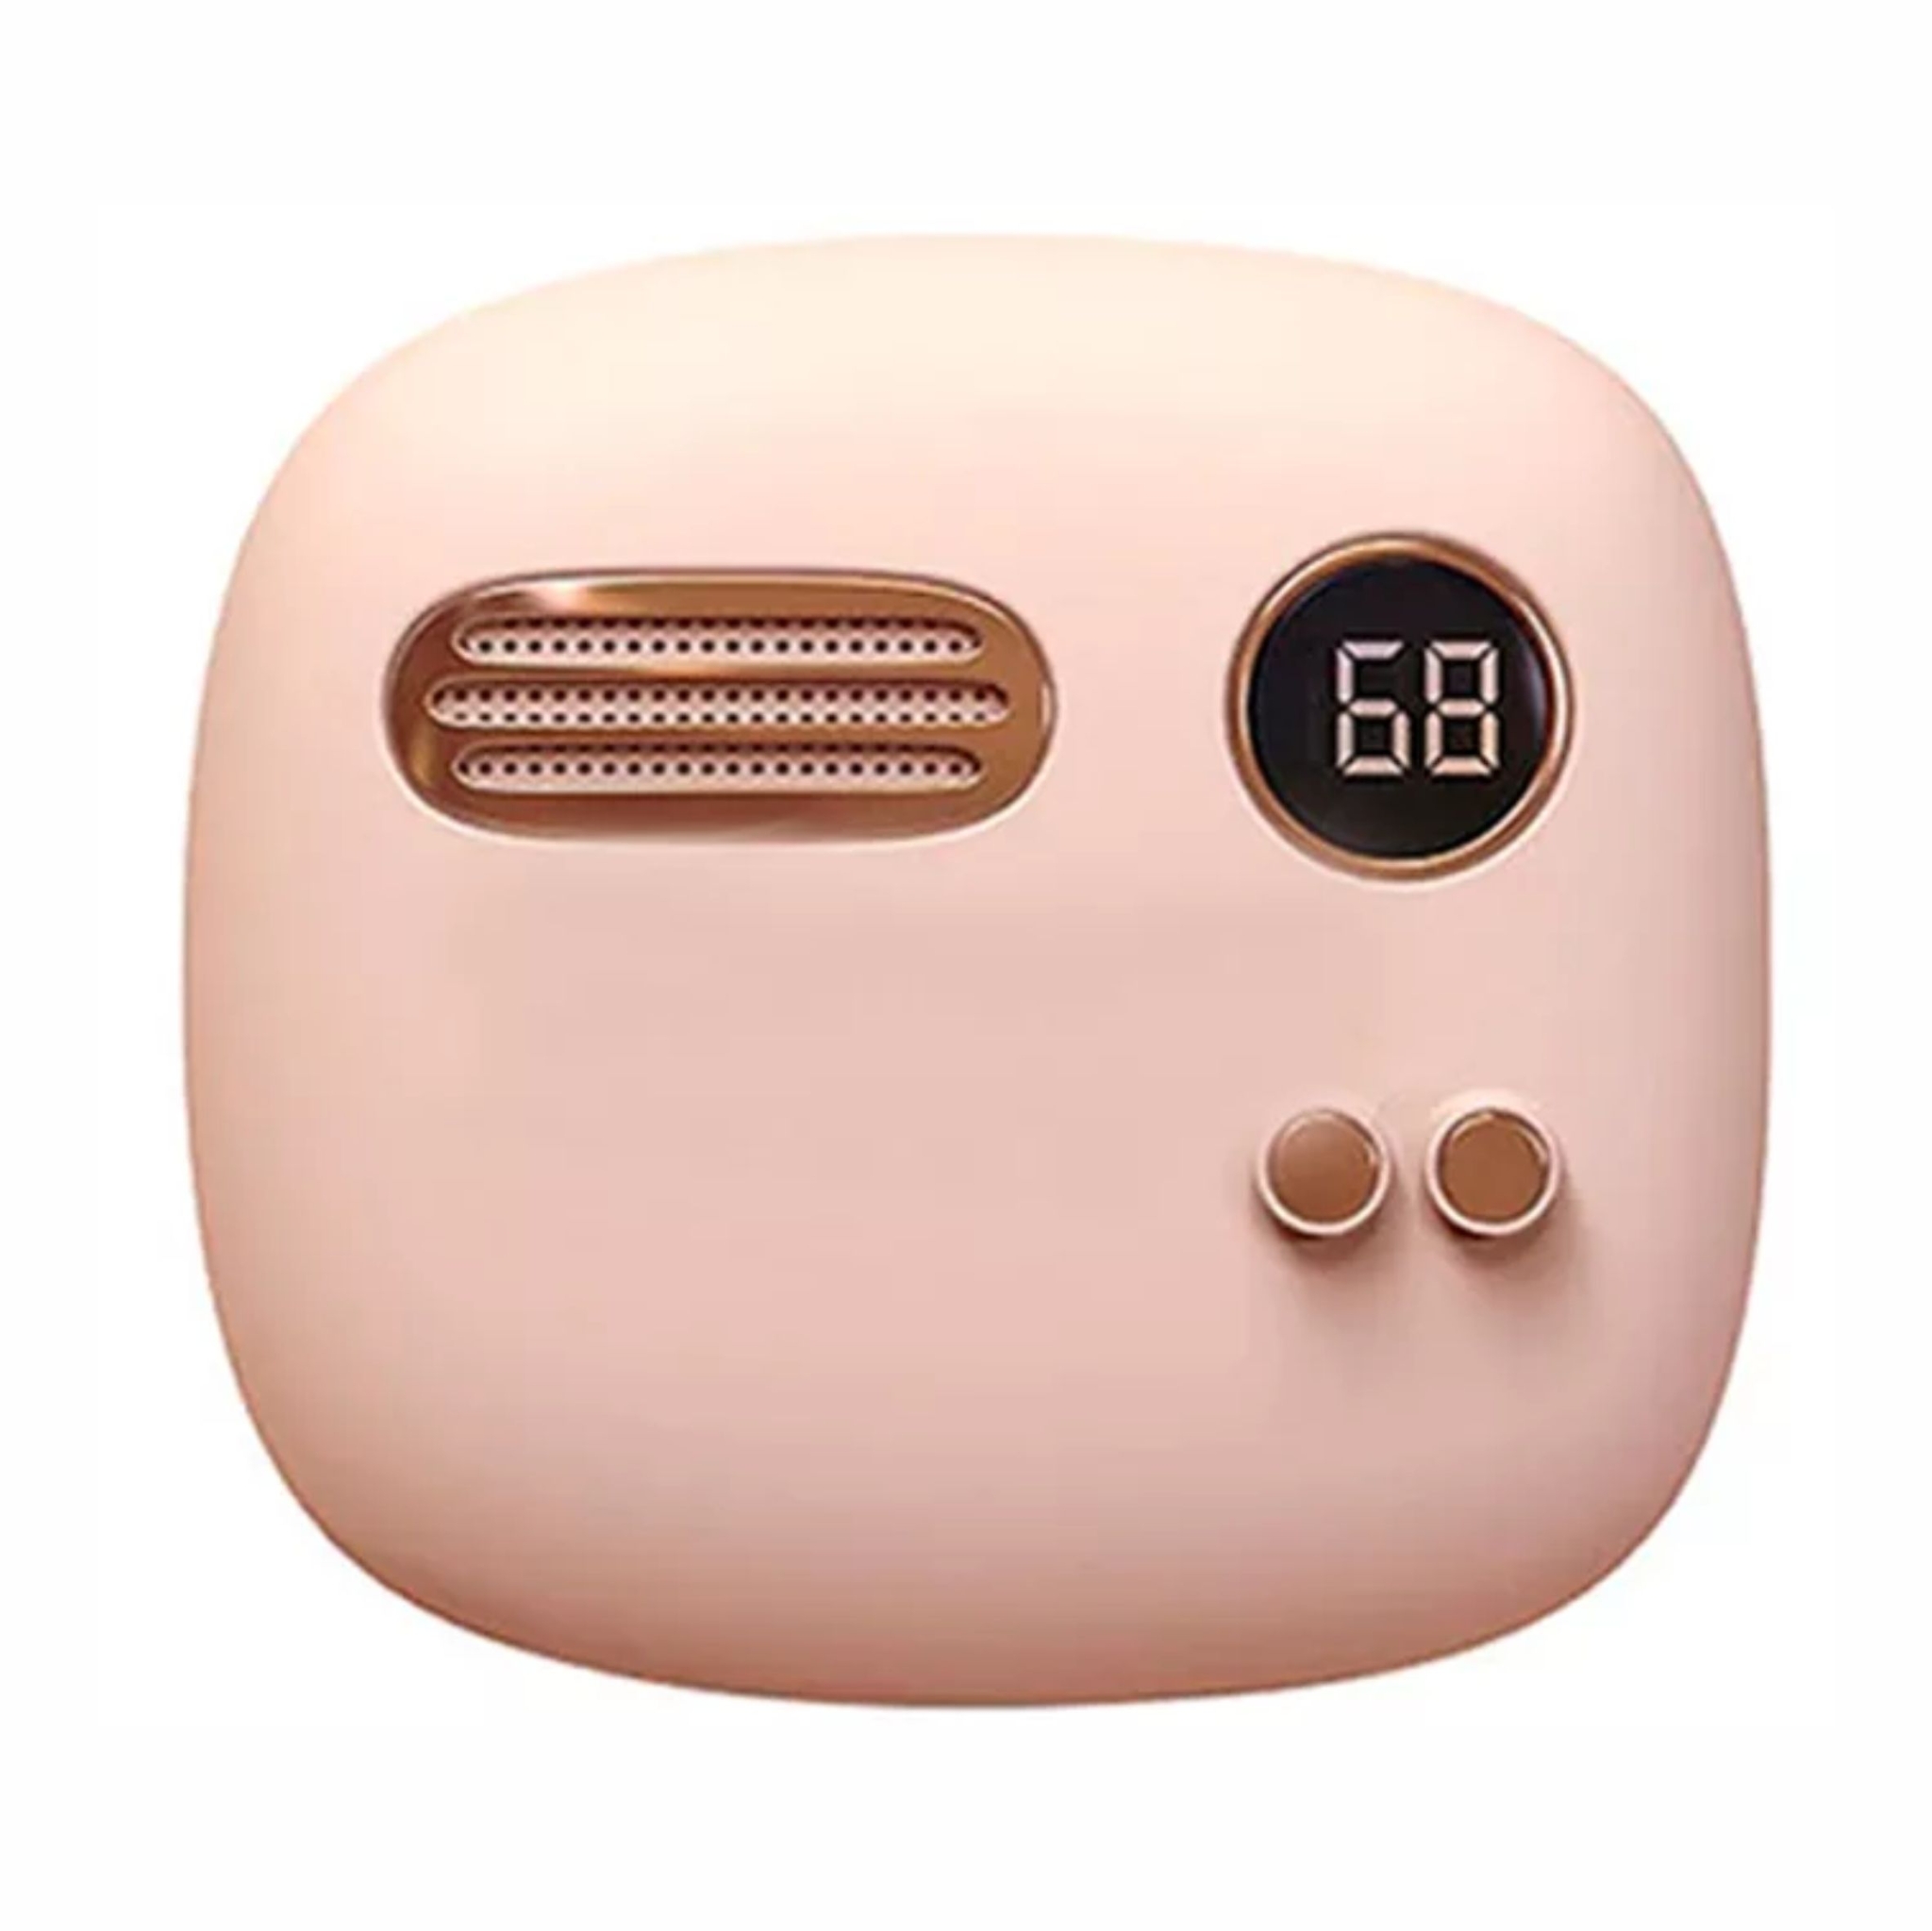 ПЗУ-грелка Maoxin Hand Warmer, розовый, розовый, алюминий+пластик